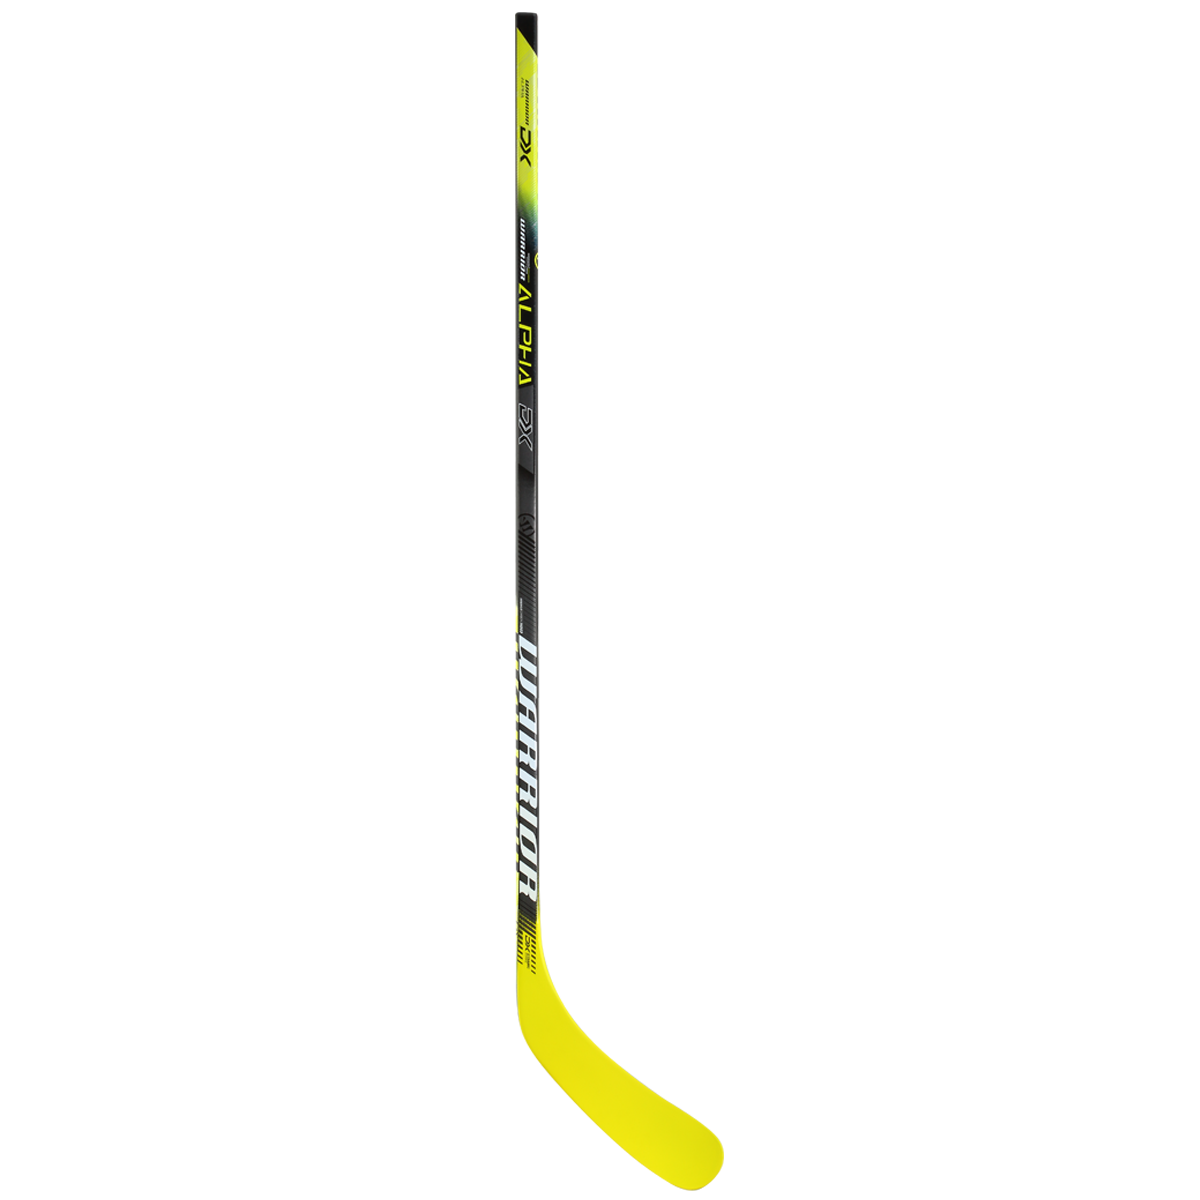 Warrior Alpha DX Youth Hockey Stick